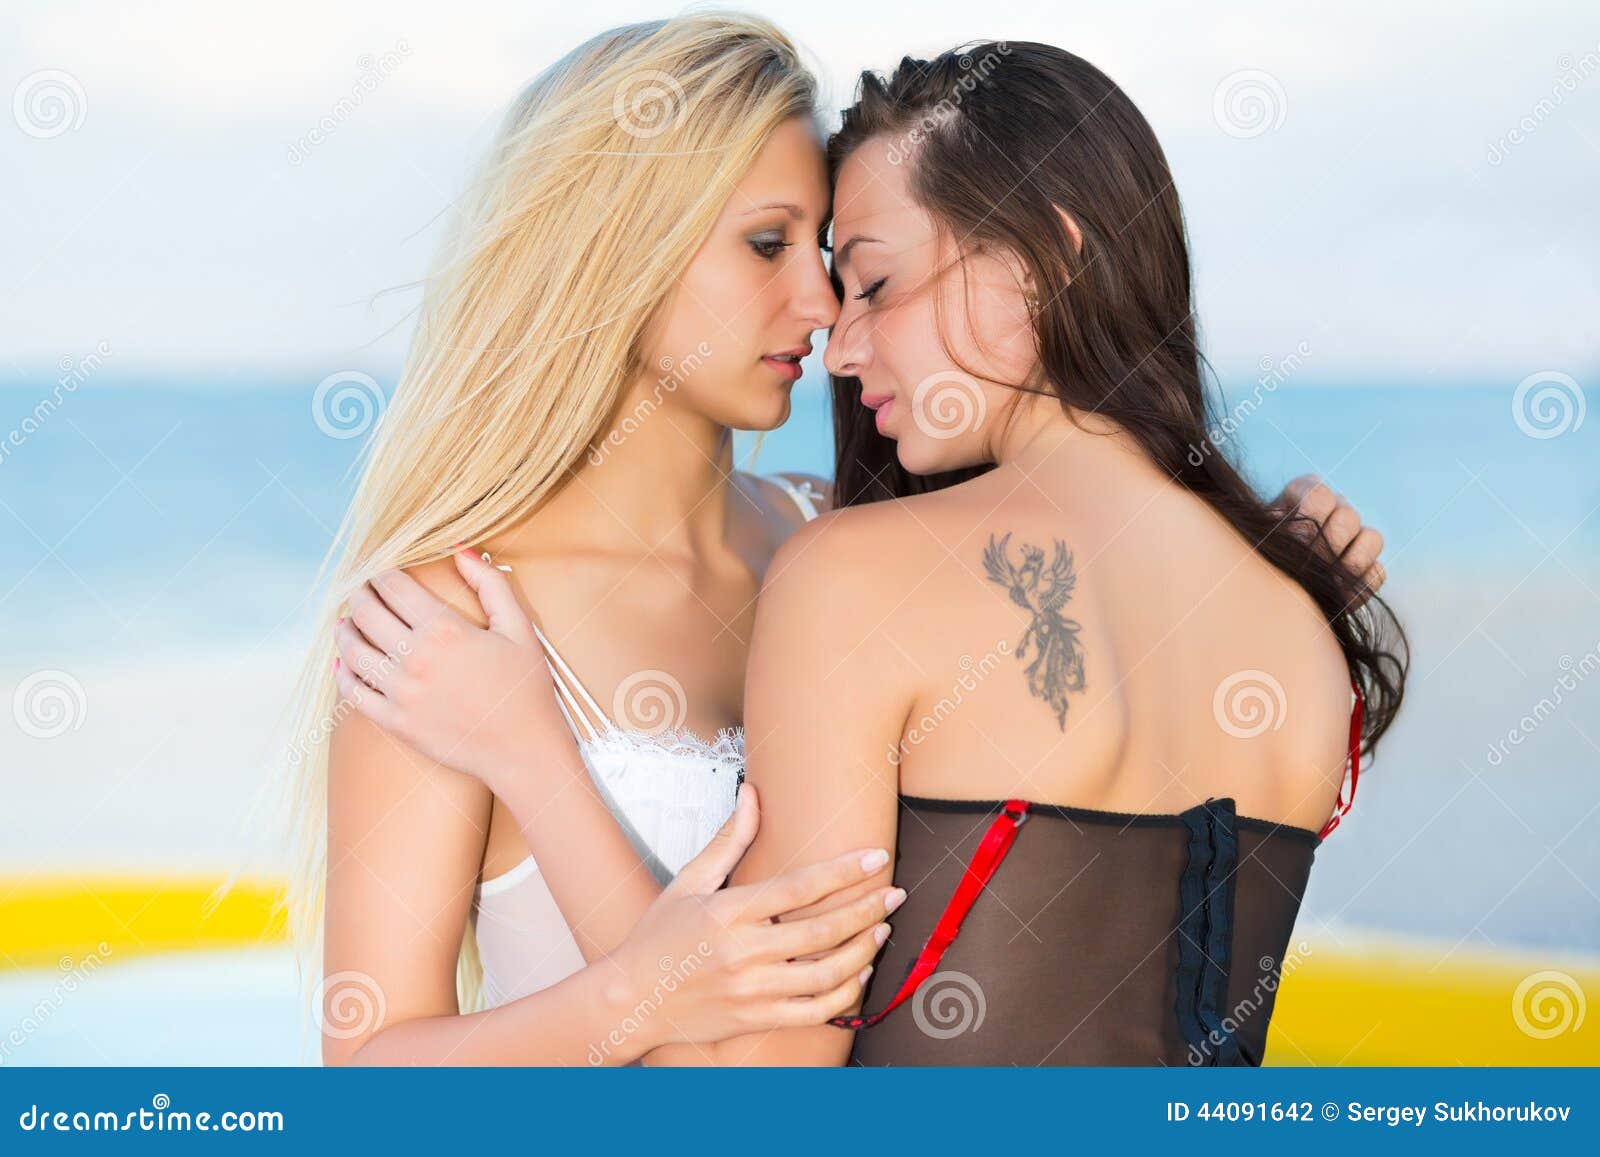 christina cyril share 2 hot women kissing photos